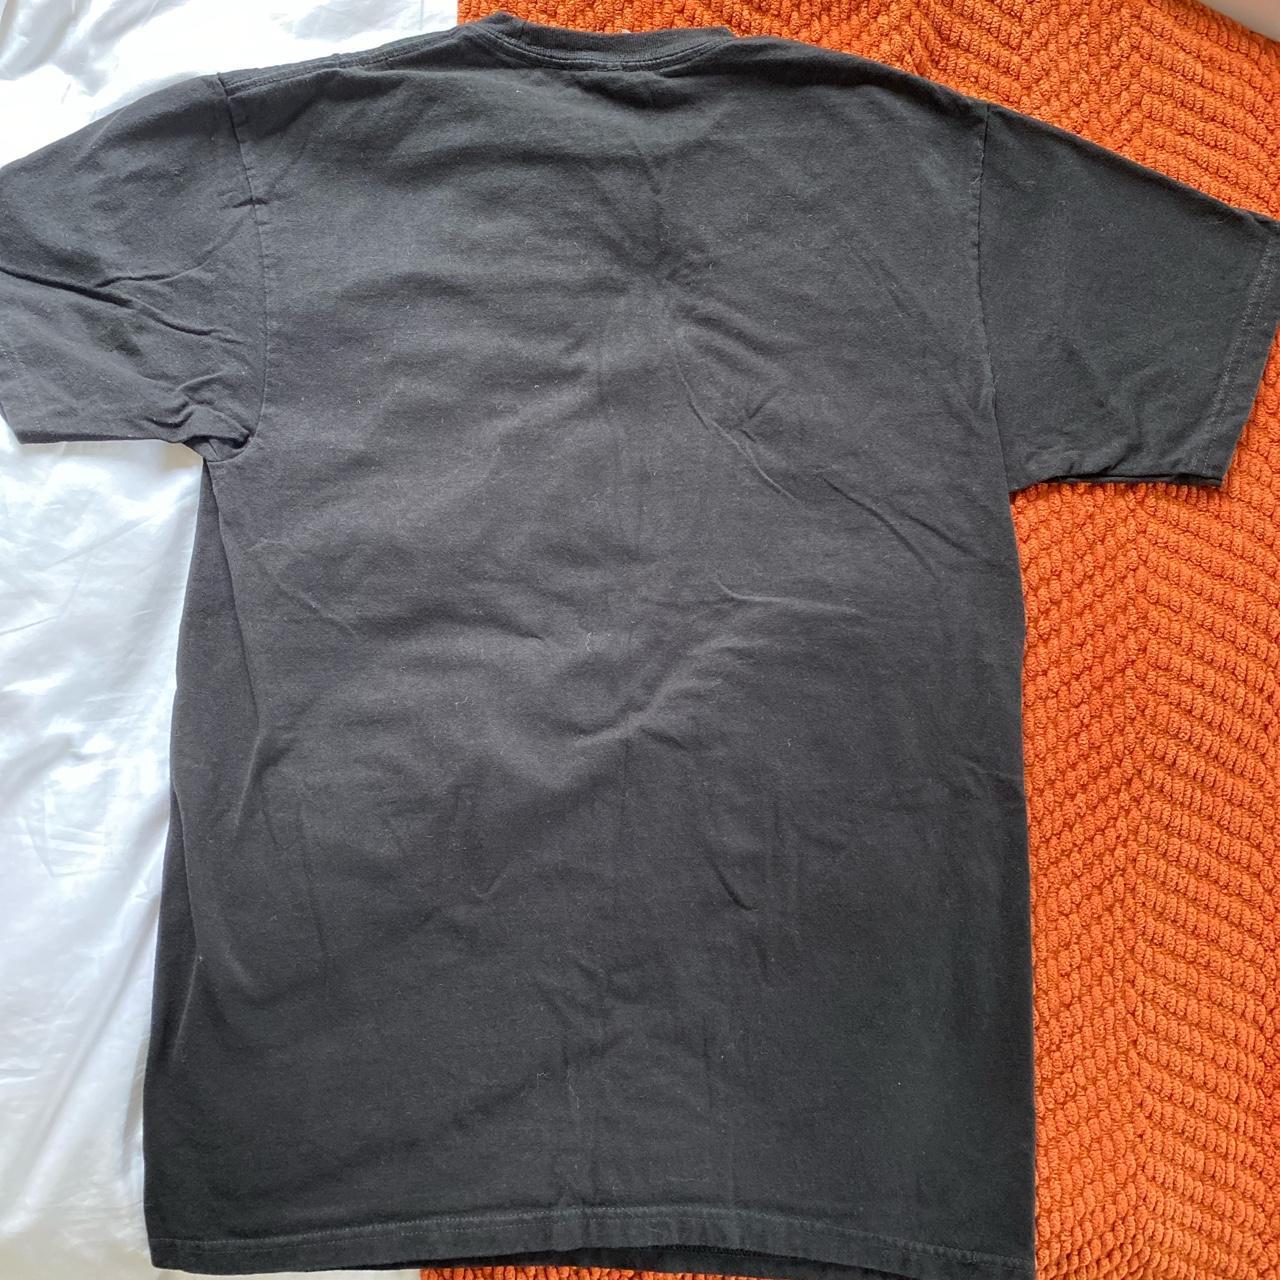 Tultex Women's Black and Orange Shirt | Depop